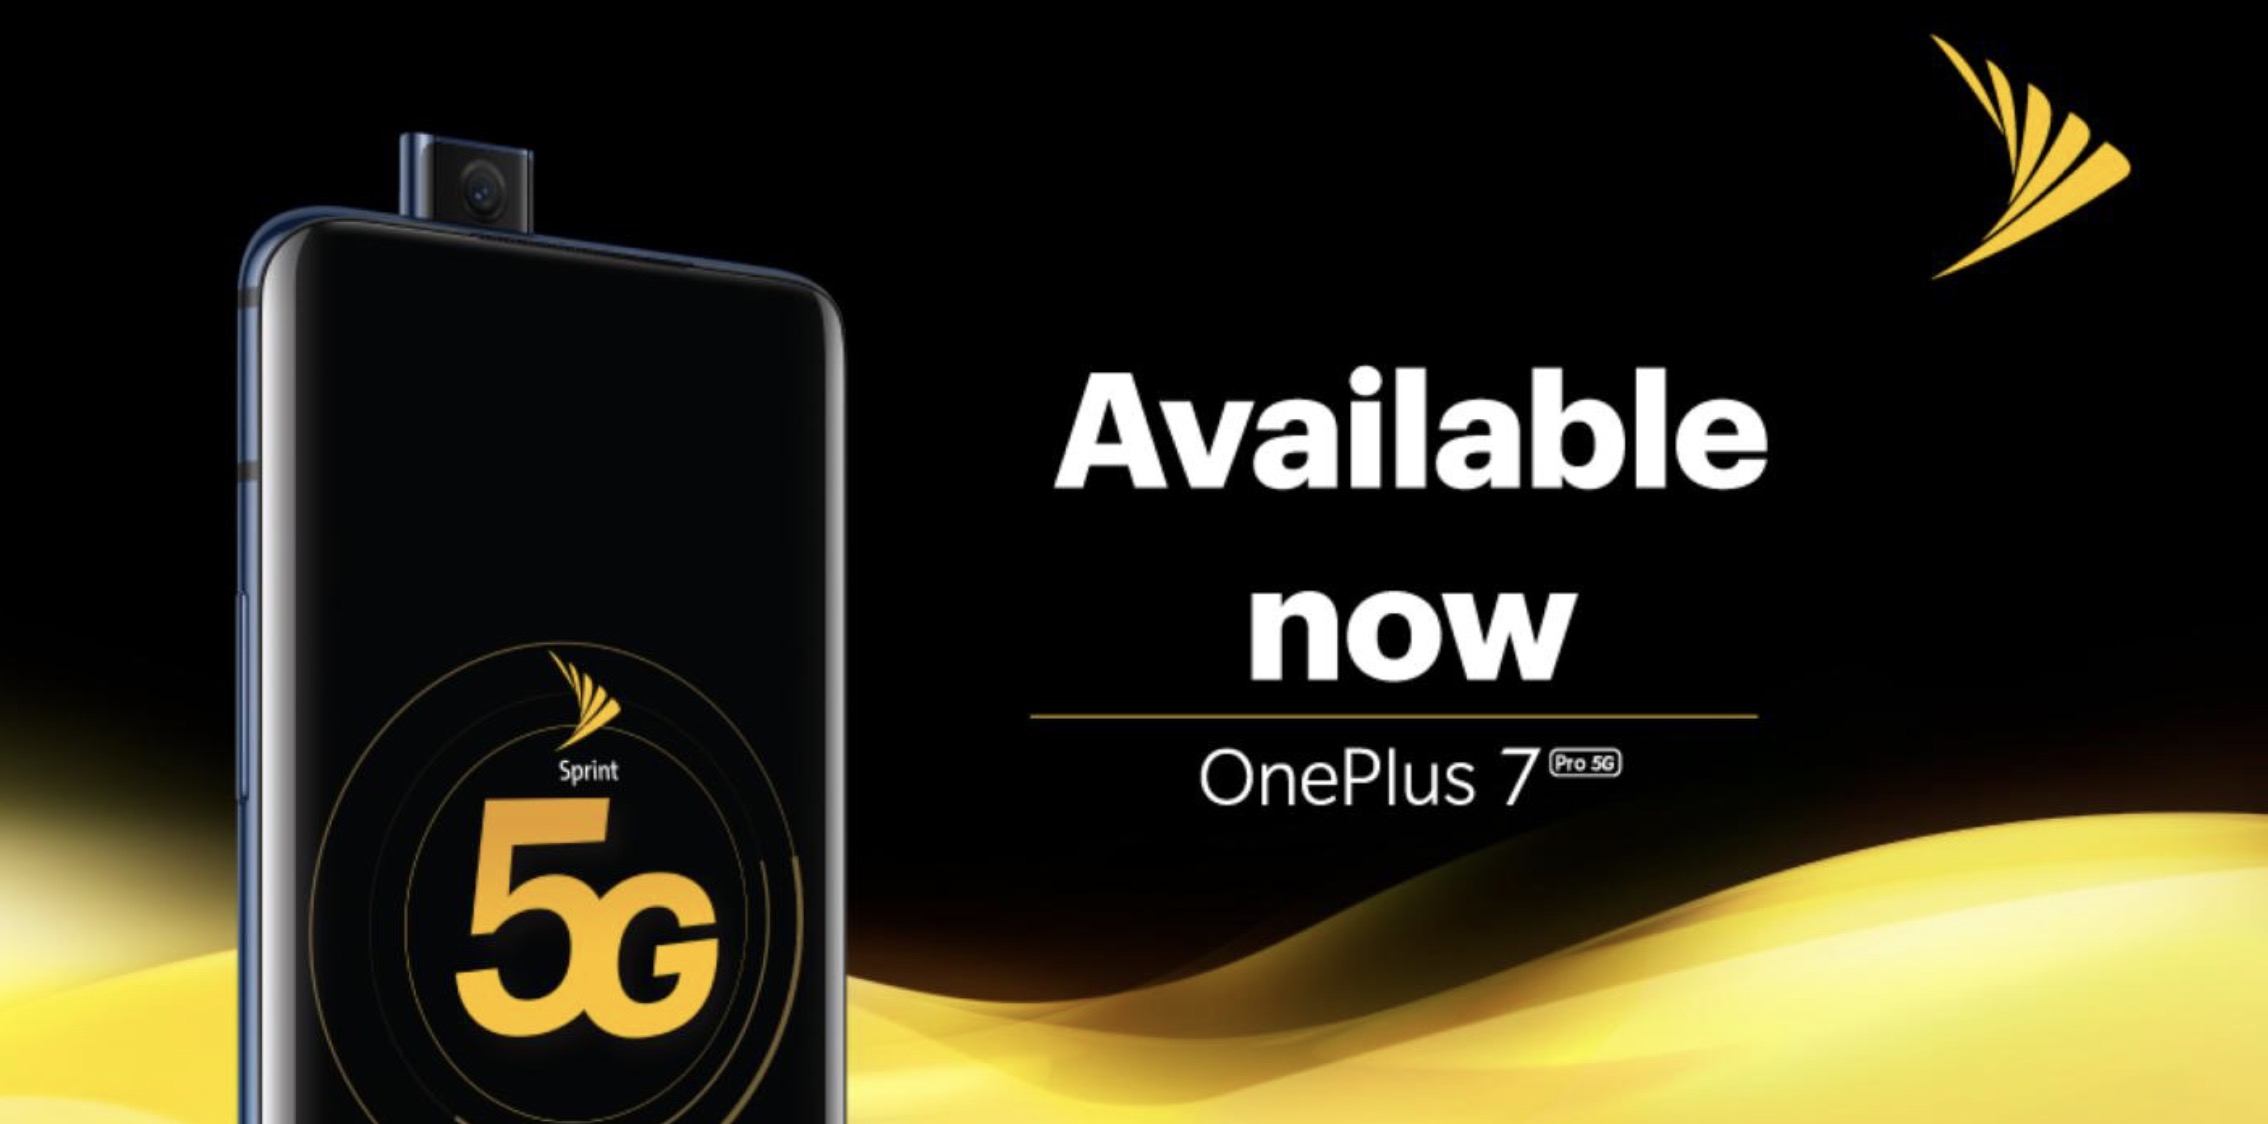 OnePlus 7 Pro 5G bergabung dengan line-up Sprint